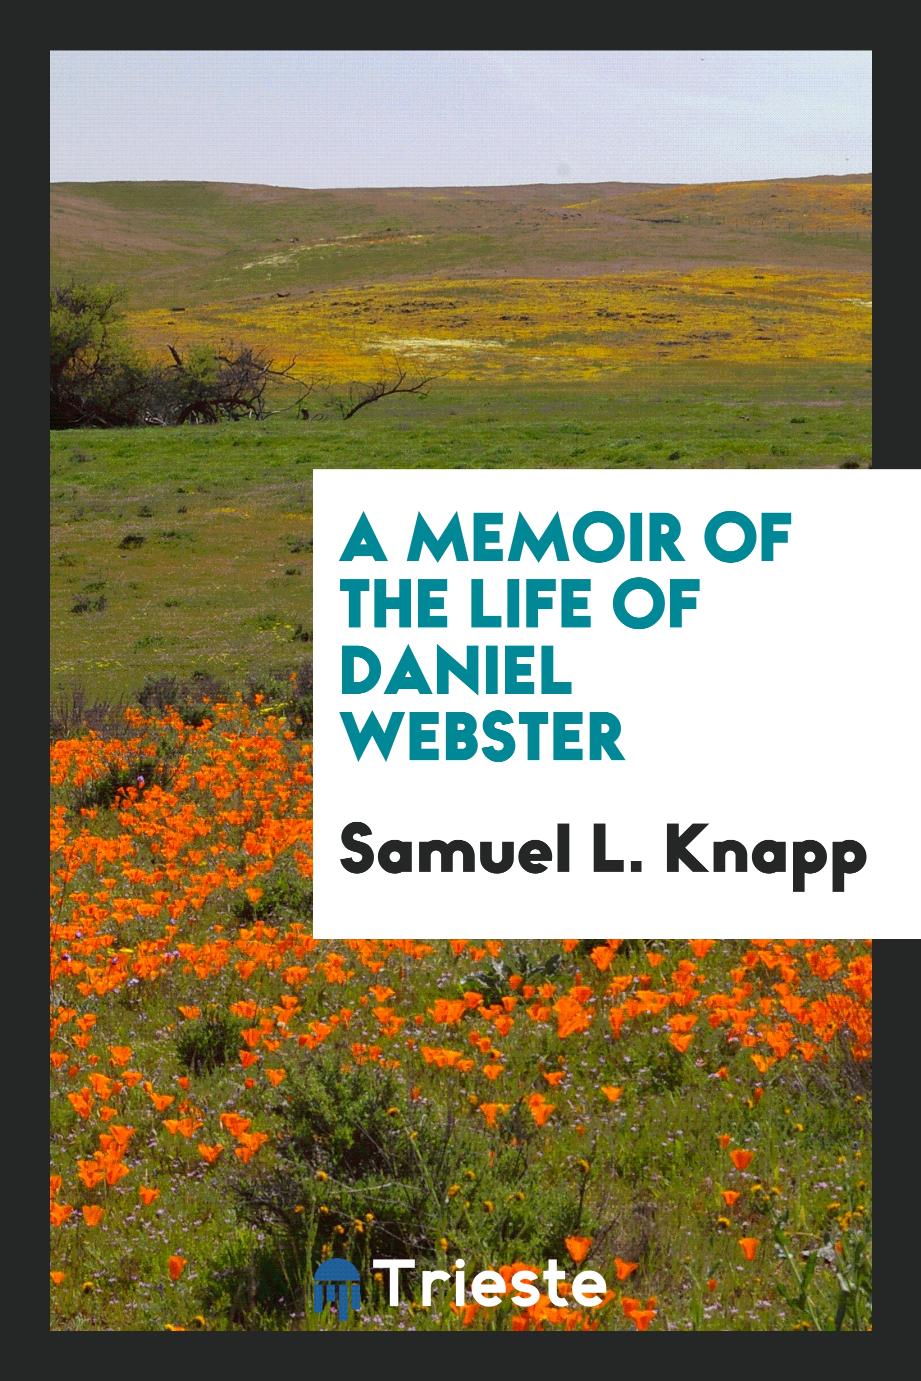 A Memoir of the Life of Daniel Webster